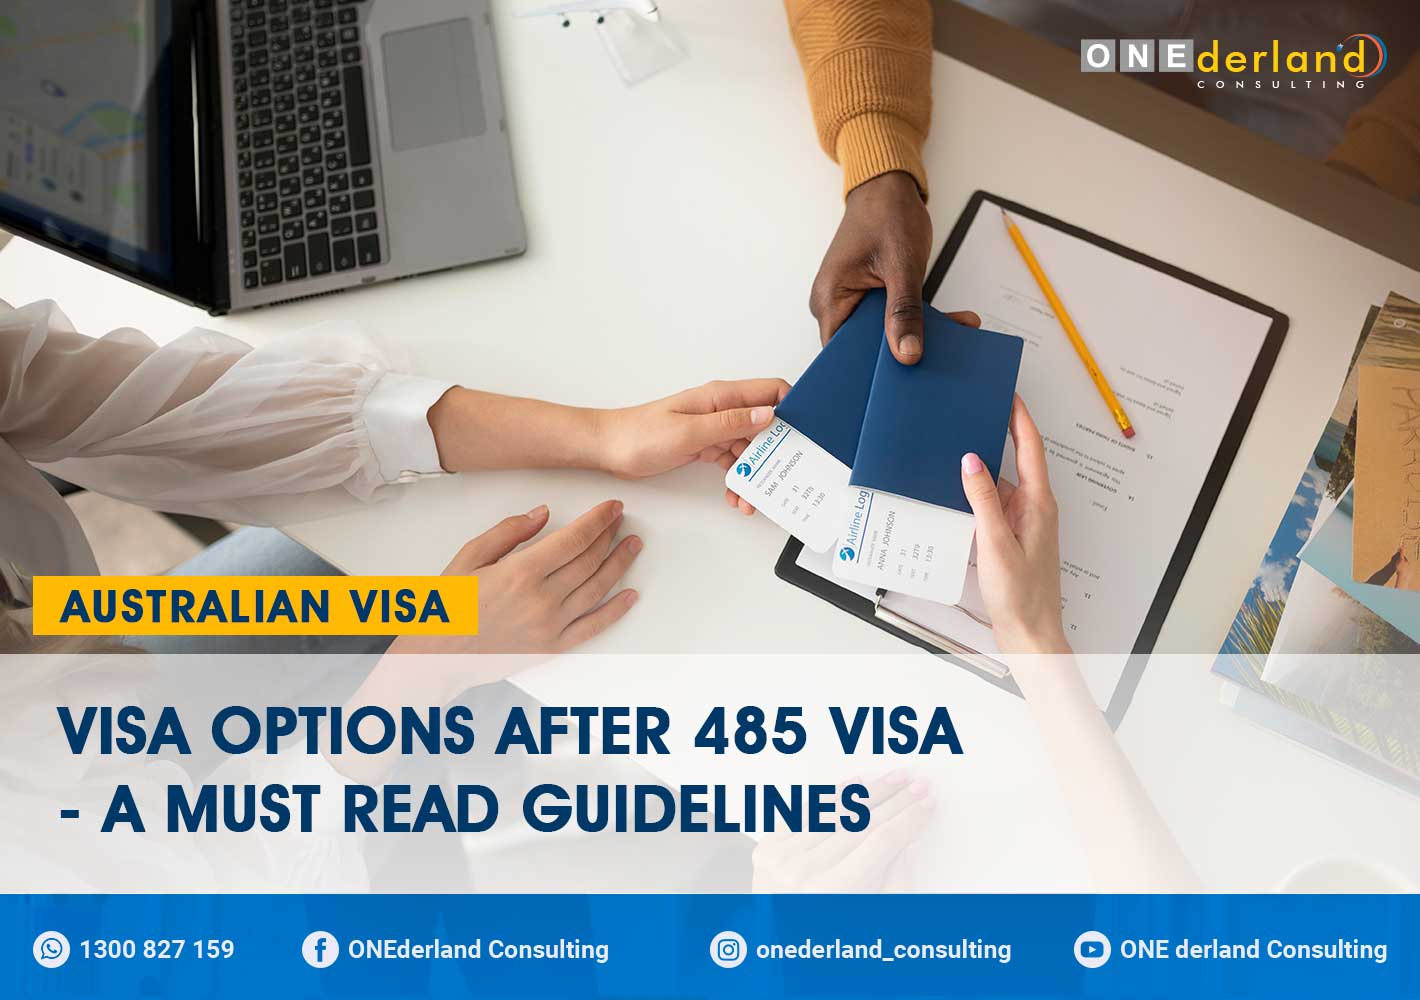 Visa Options After 485 Visa - A Must Read Guidelines